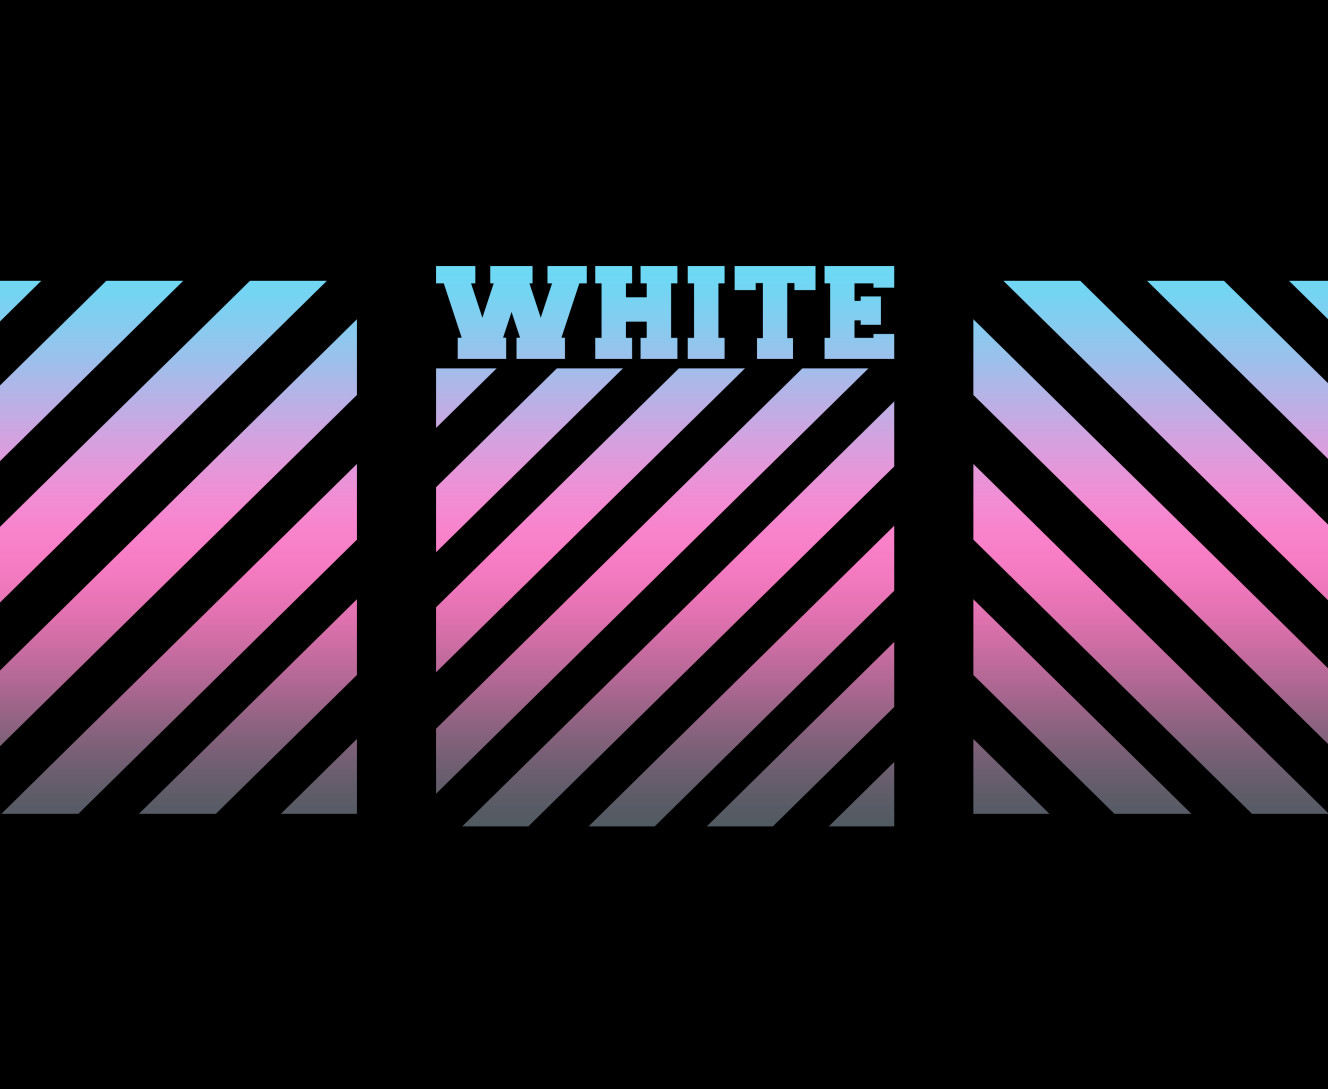 OFF WHITE (7)